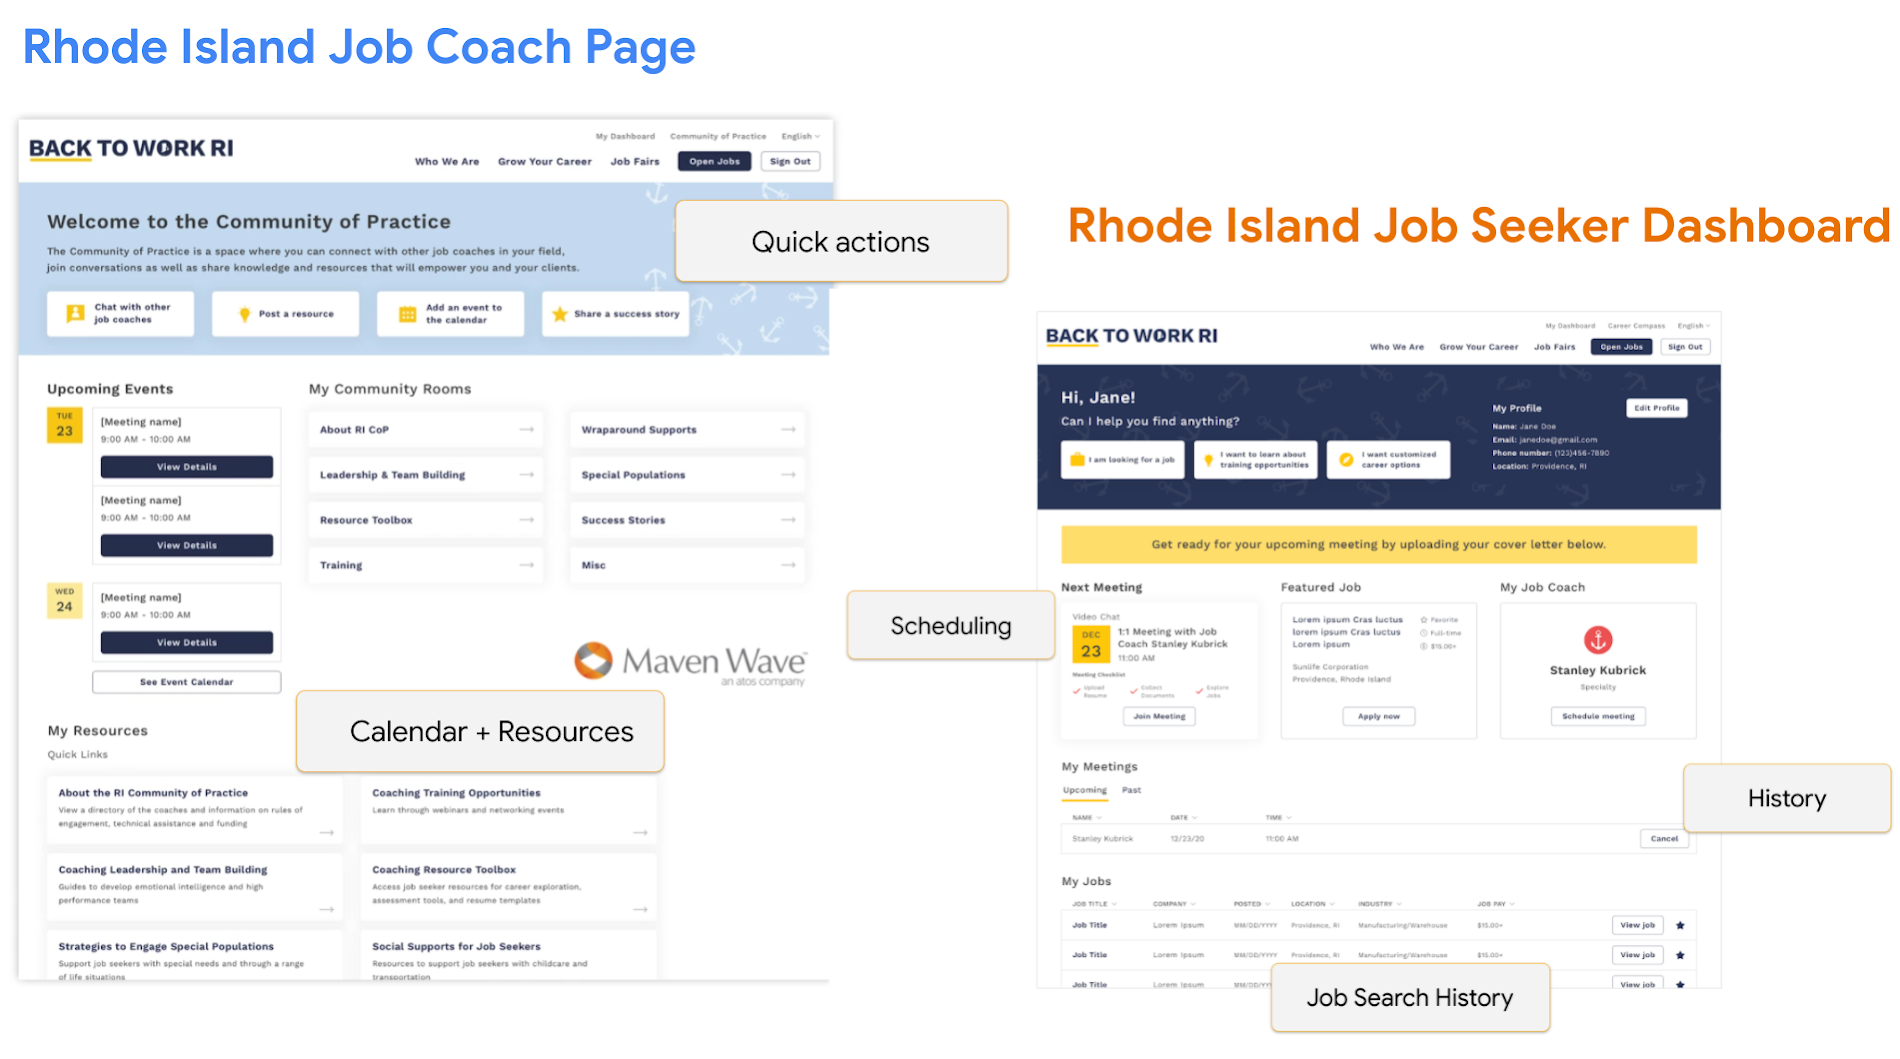 https://storage.googleapis.com/gweb-cloudblog-publish/images/Rhode_Island_Job_Coach_Page.max-1900x1900.png